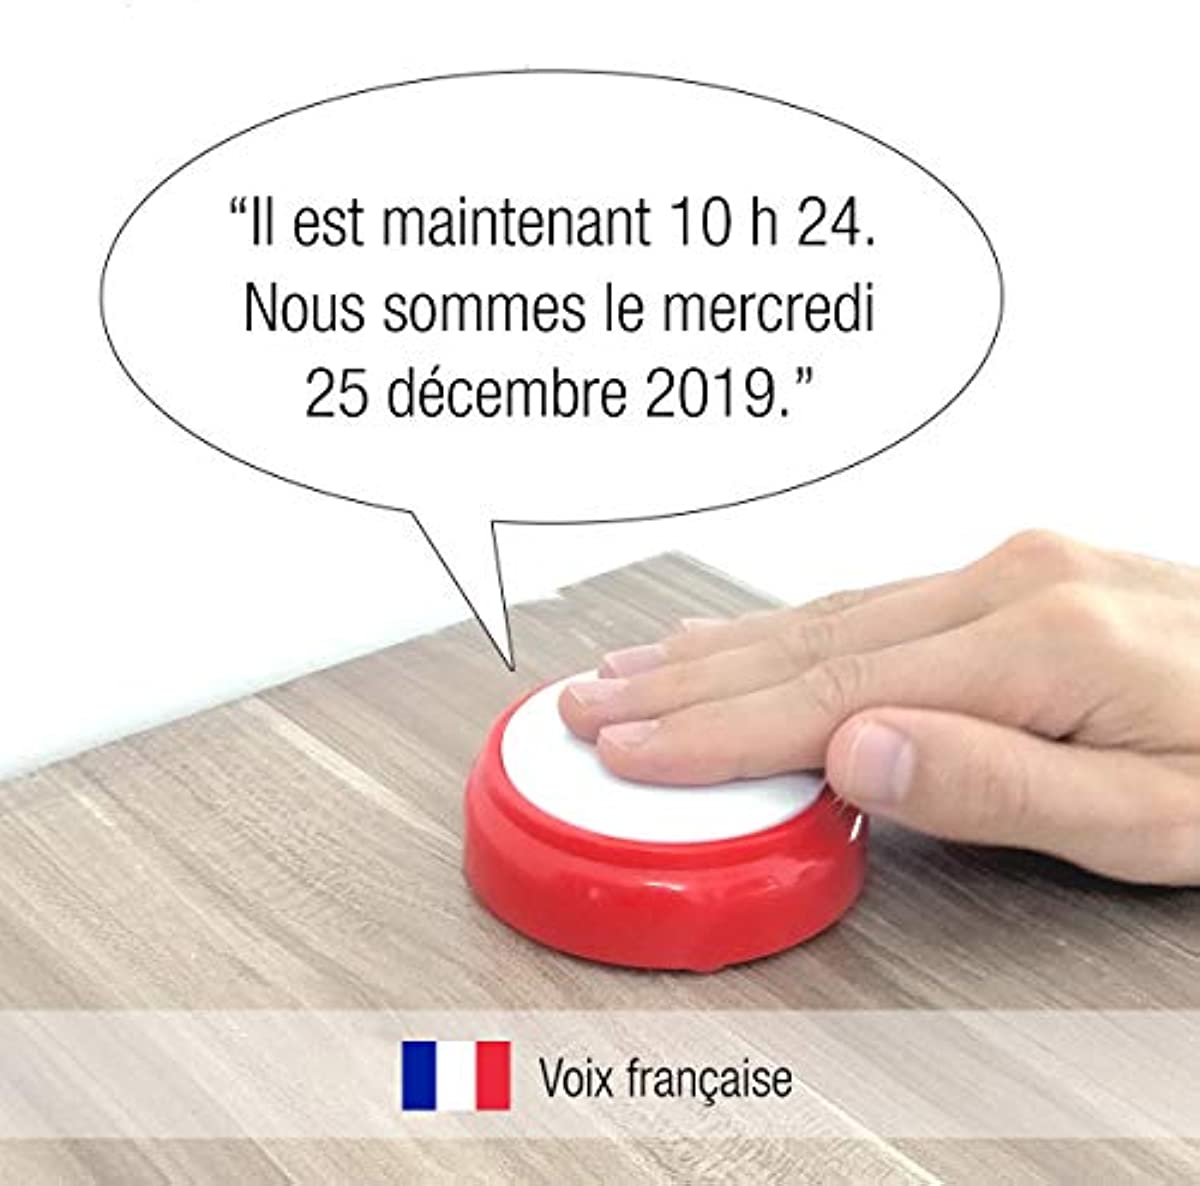 French Talking Clock - Horloge Parlante Voix Française - Telling Time in French for The Visually Impaired, Blind, Elderly, Alzheimer\'s - Speaking Clock Français